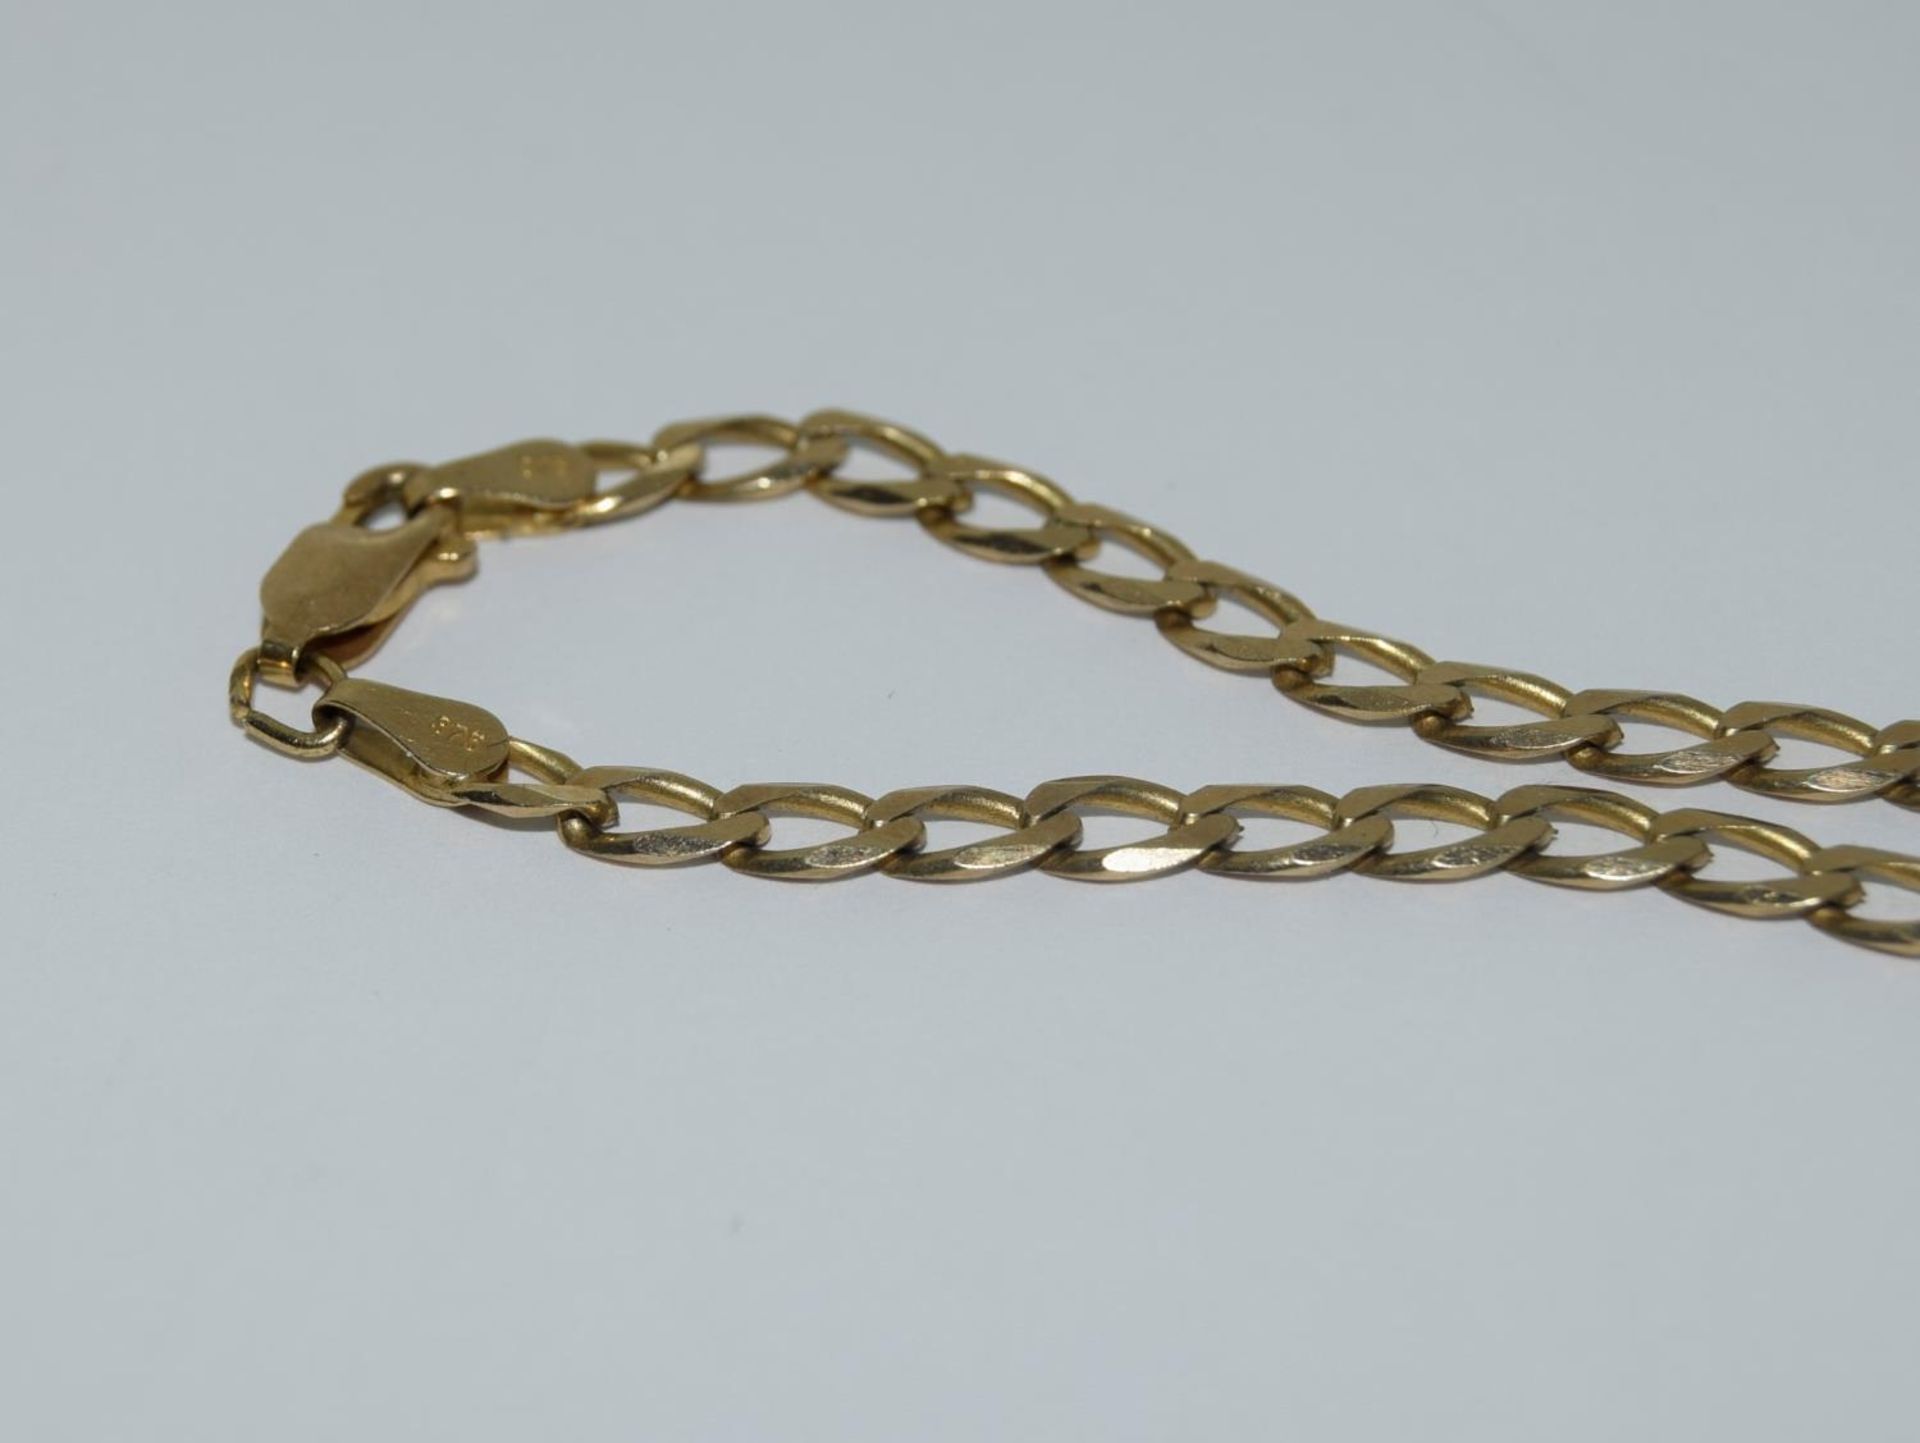 9ct gold flatlink chain 52cm long 10gm - Image 3 of 5